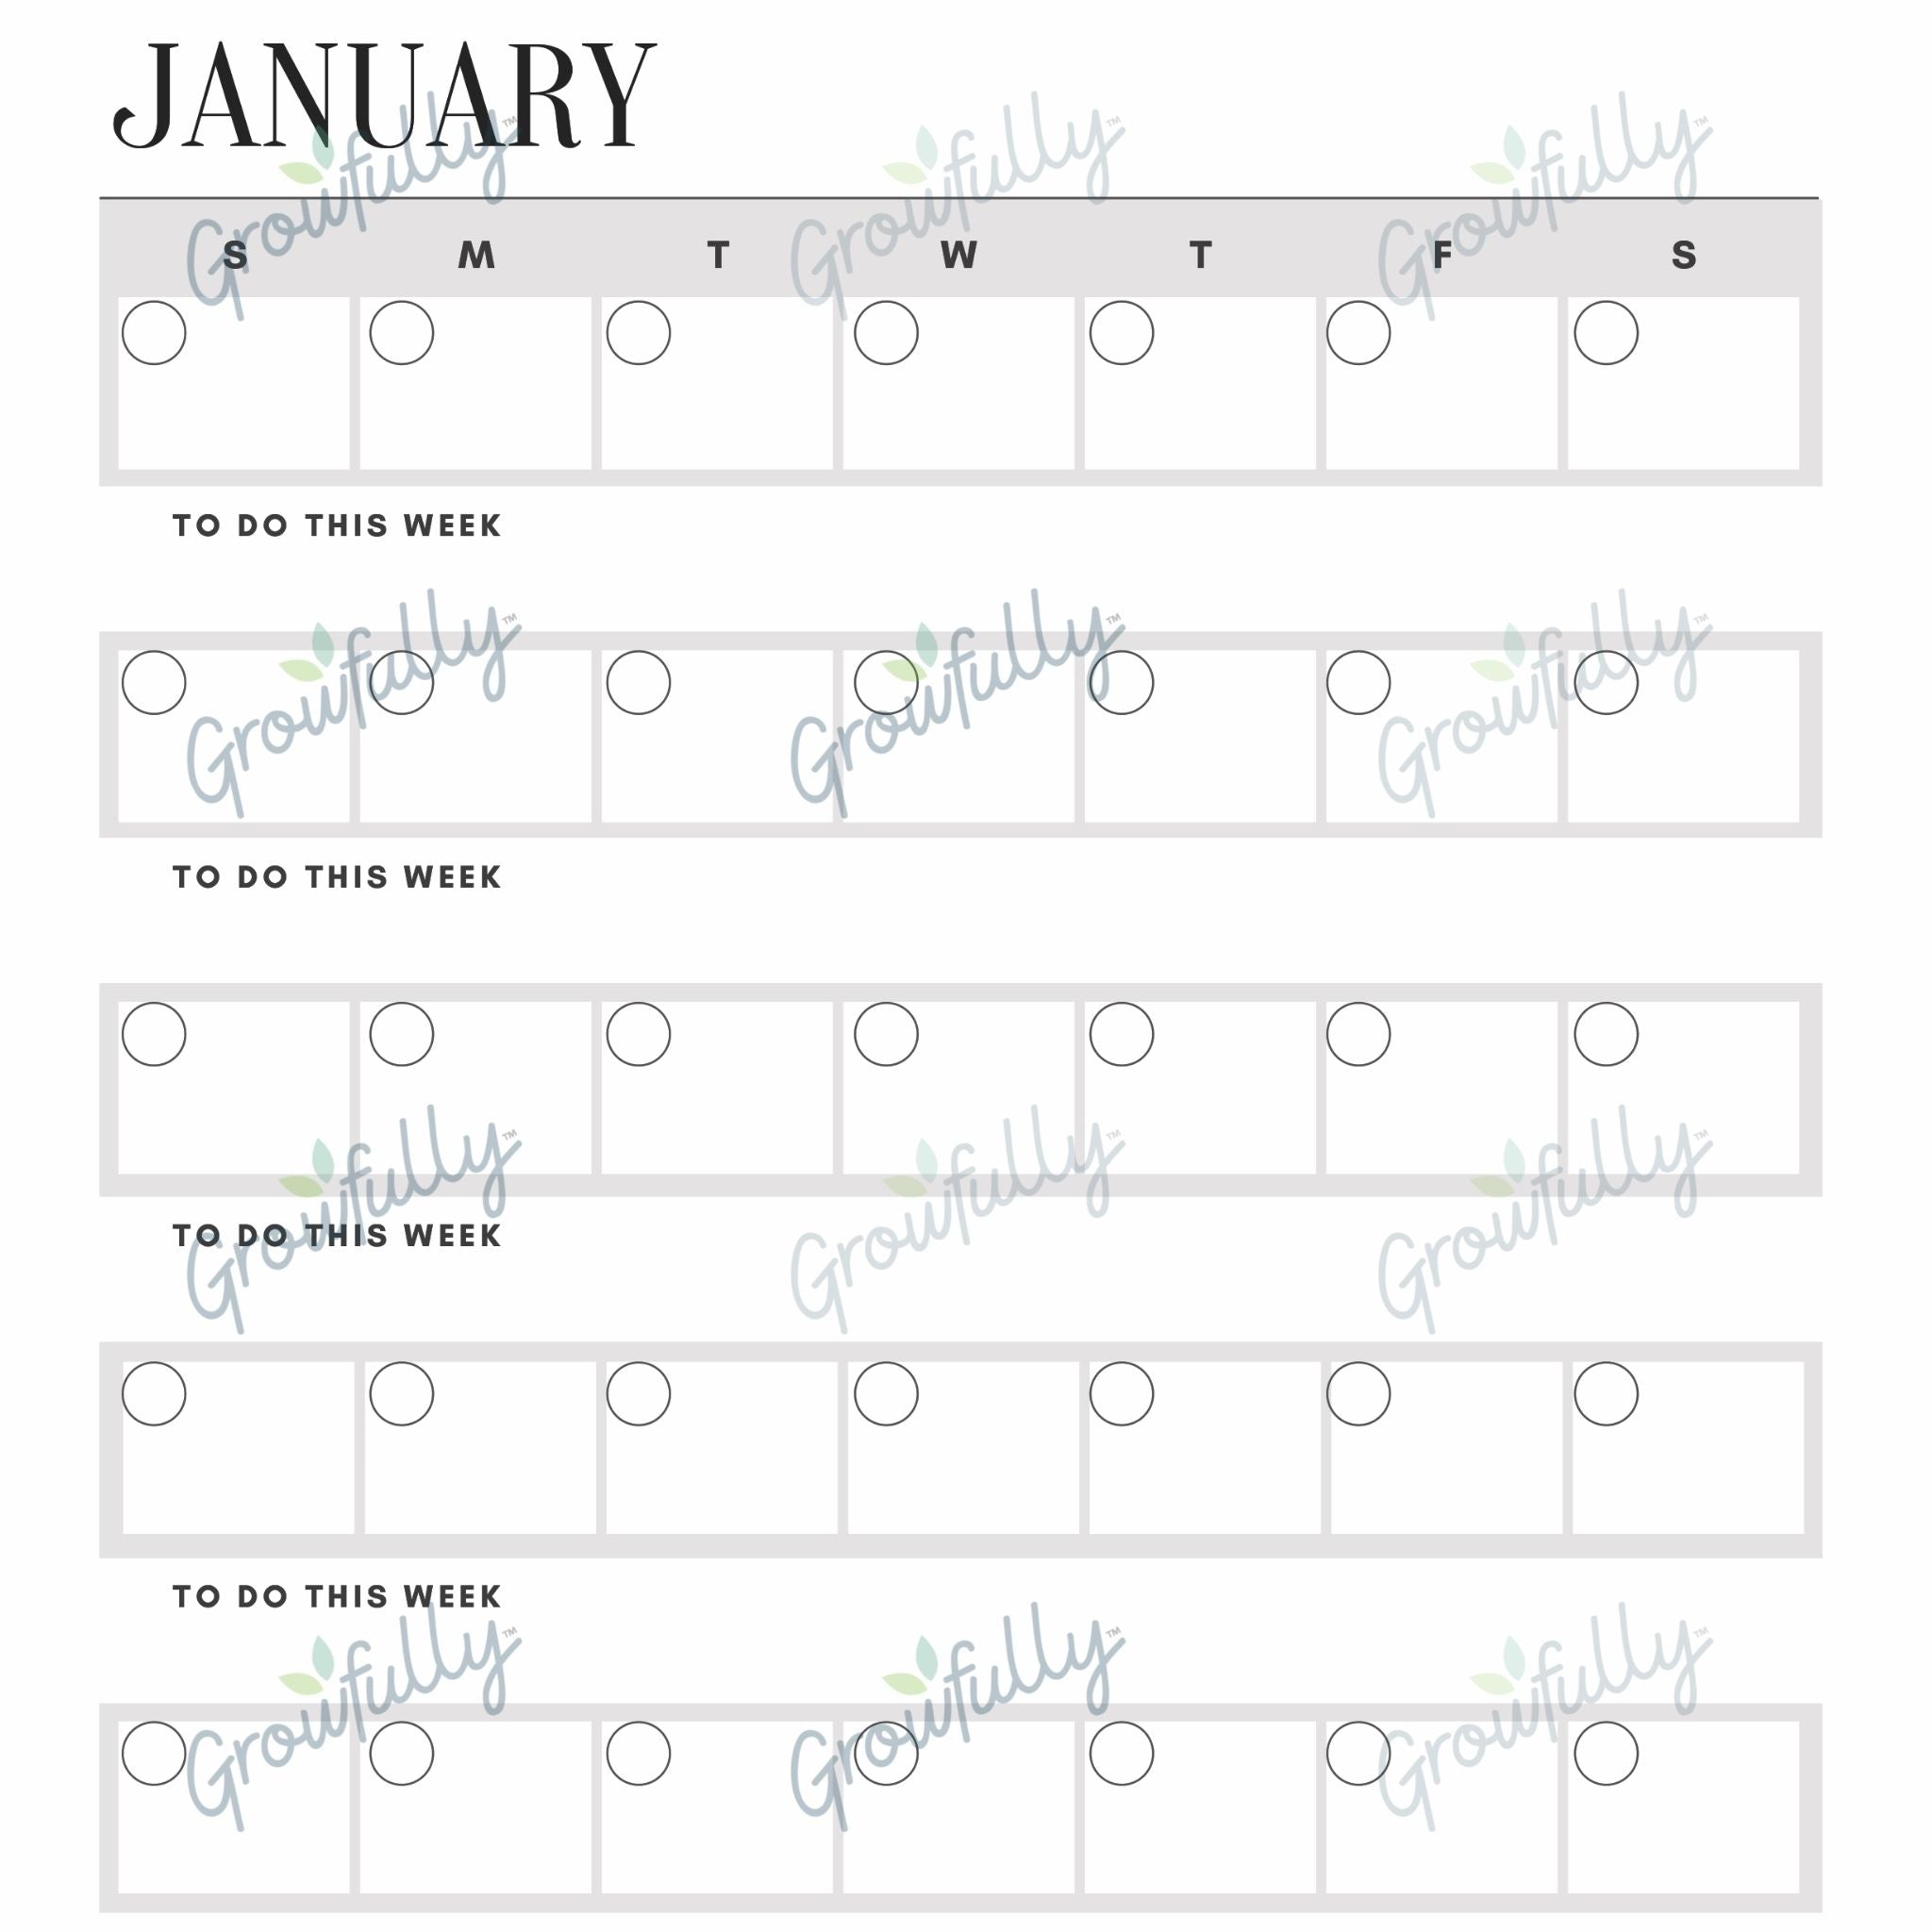 Sample of the January perpetual calendar printable